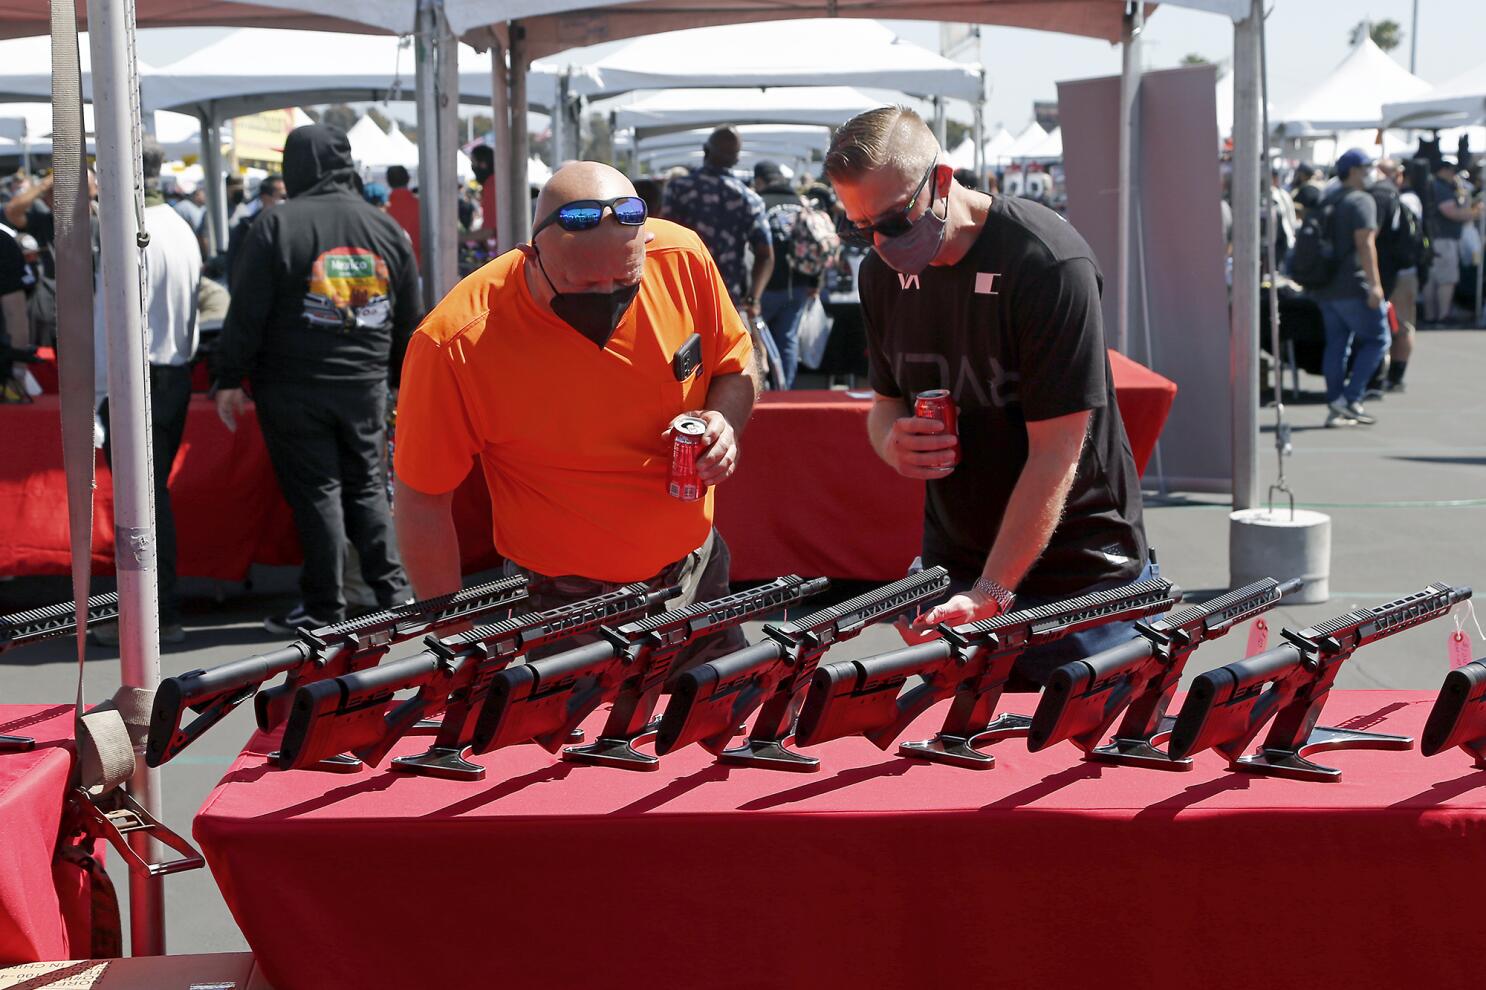 Fair board agrees to review gun show policies - The San Diego Union-Tribune